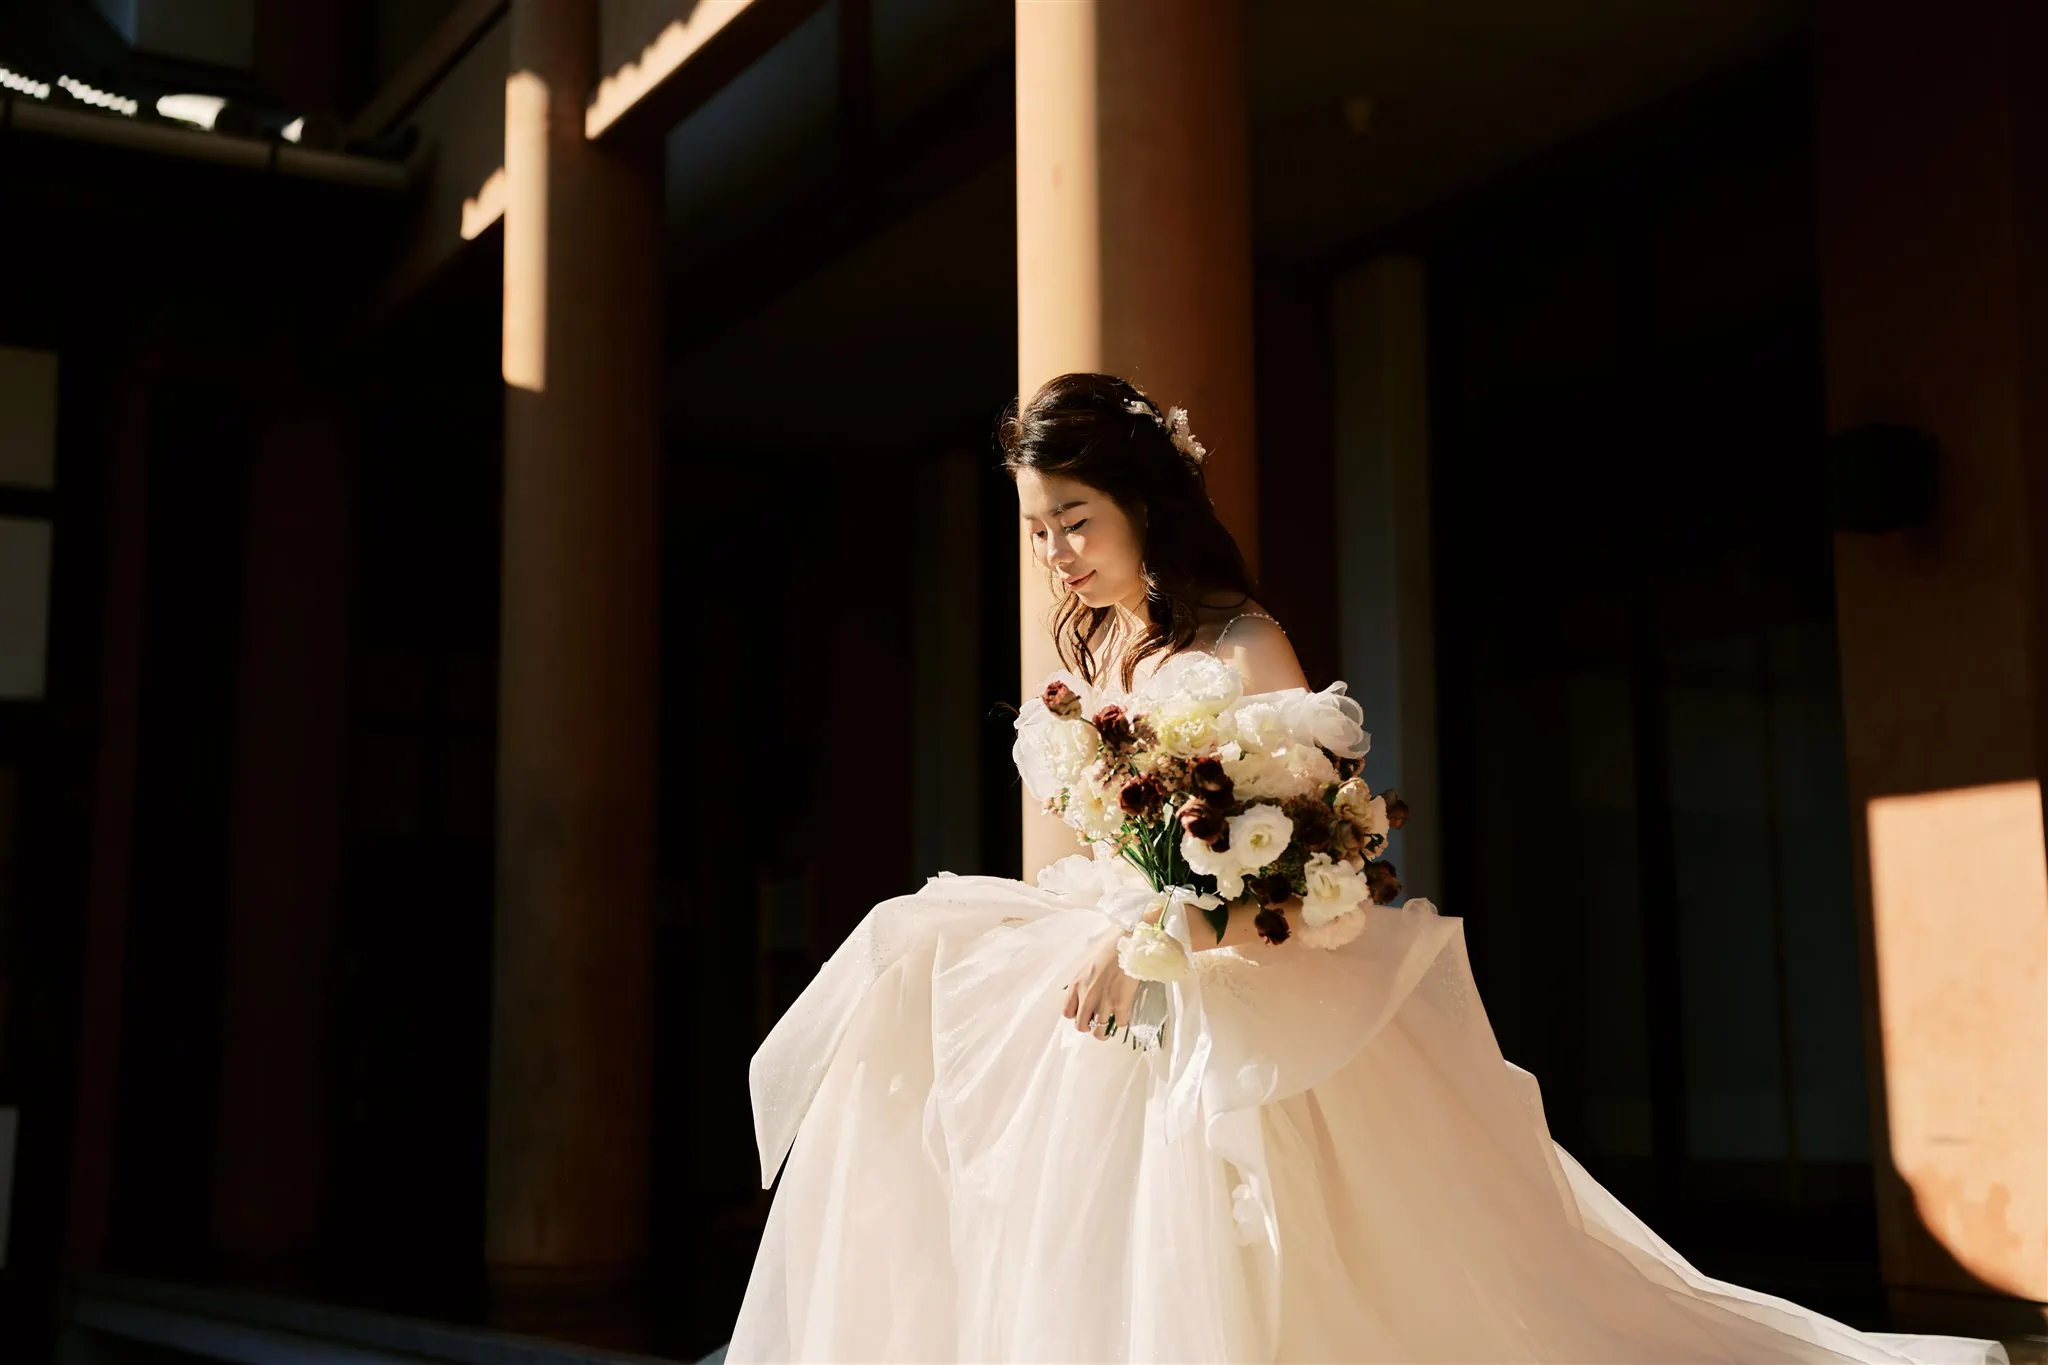 Kyoto Tokyo Japan Elopement Wedding Photographer, Planner & Videographer | A Japan bride in a wedding dress standing in front of pillars, captured beautifully by an elopement photographer.